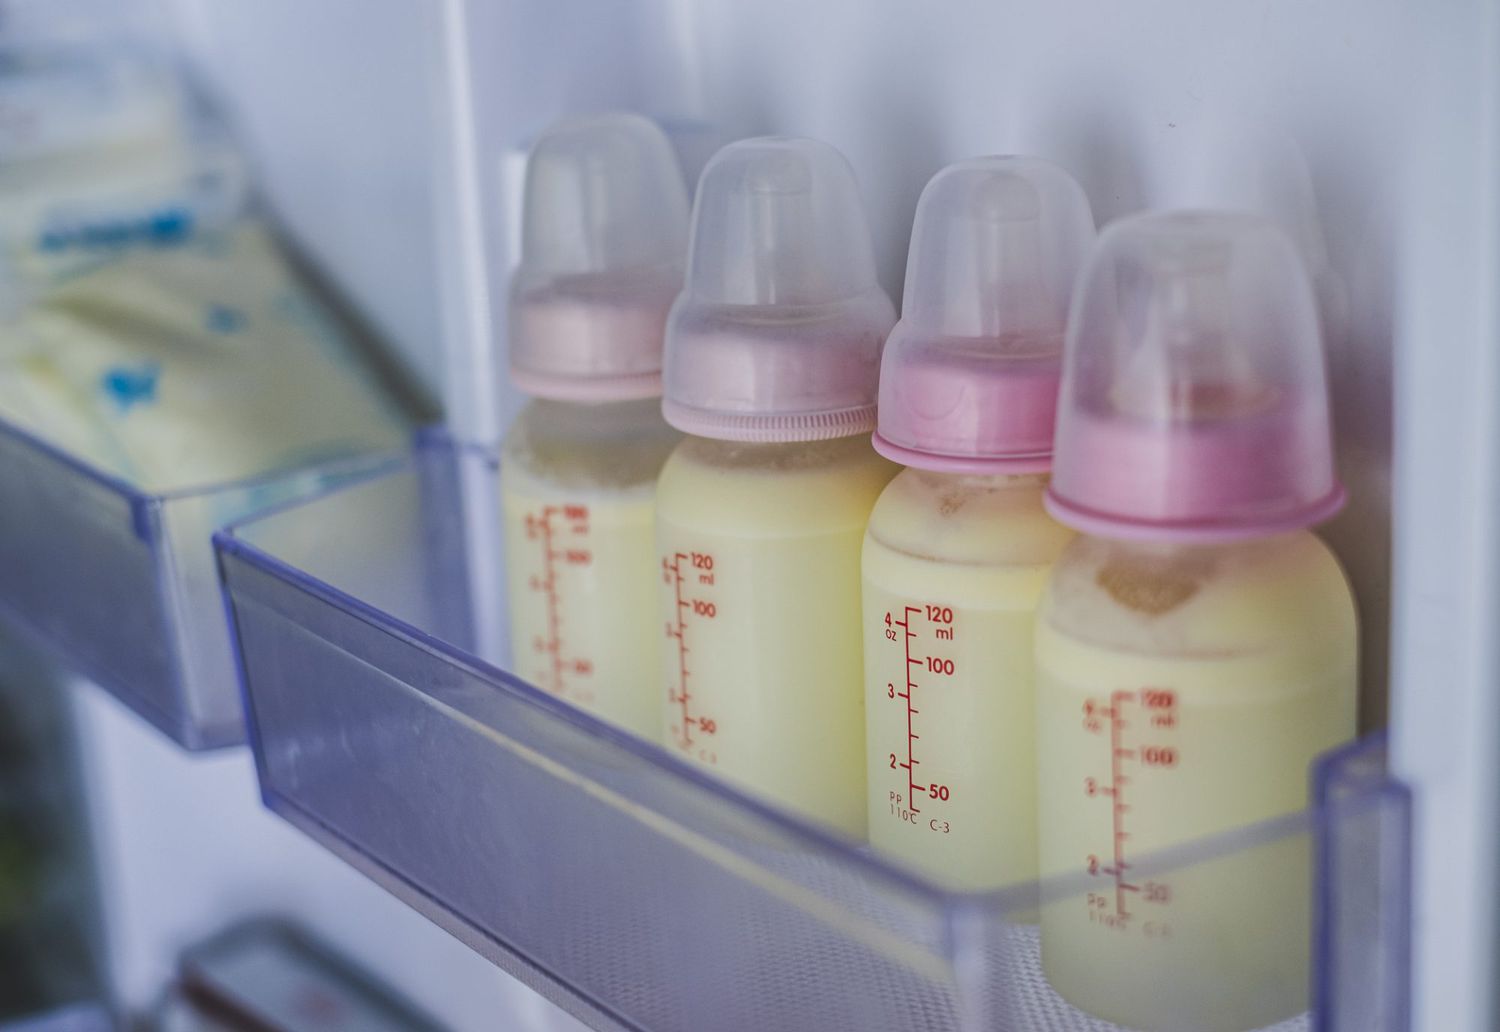 An image of breastfeeding milk bottles.